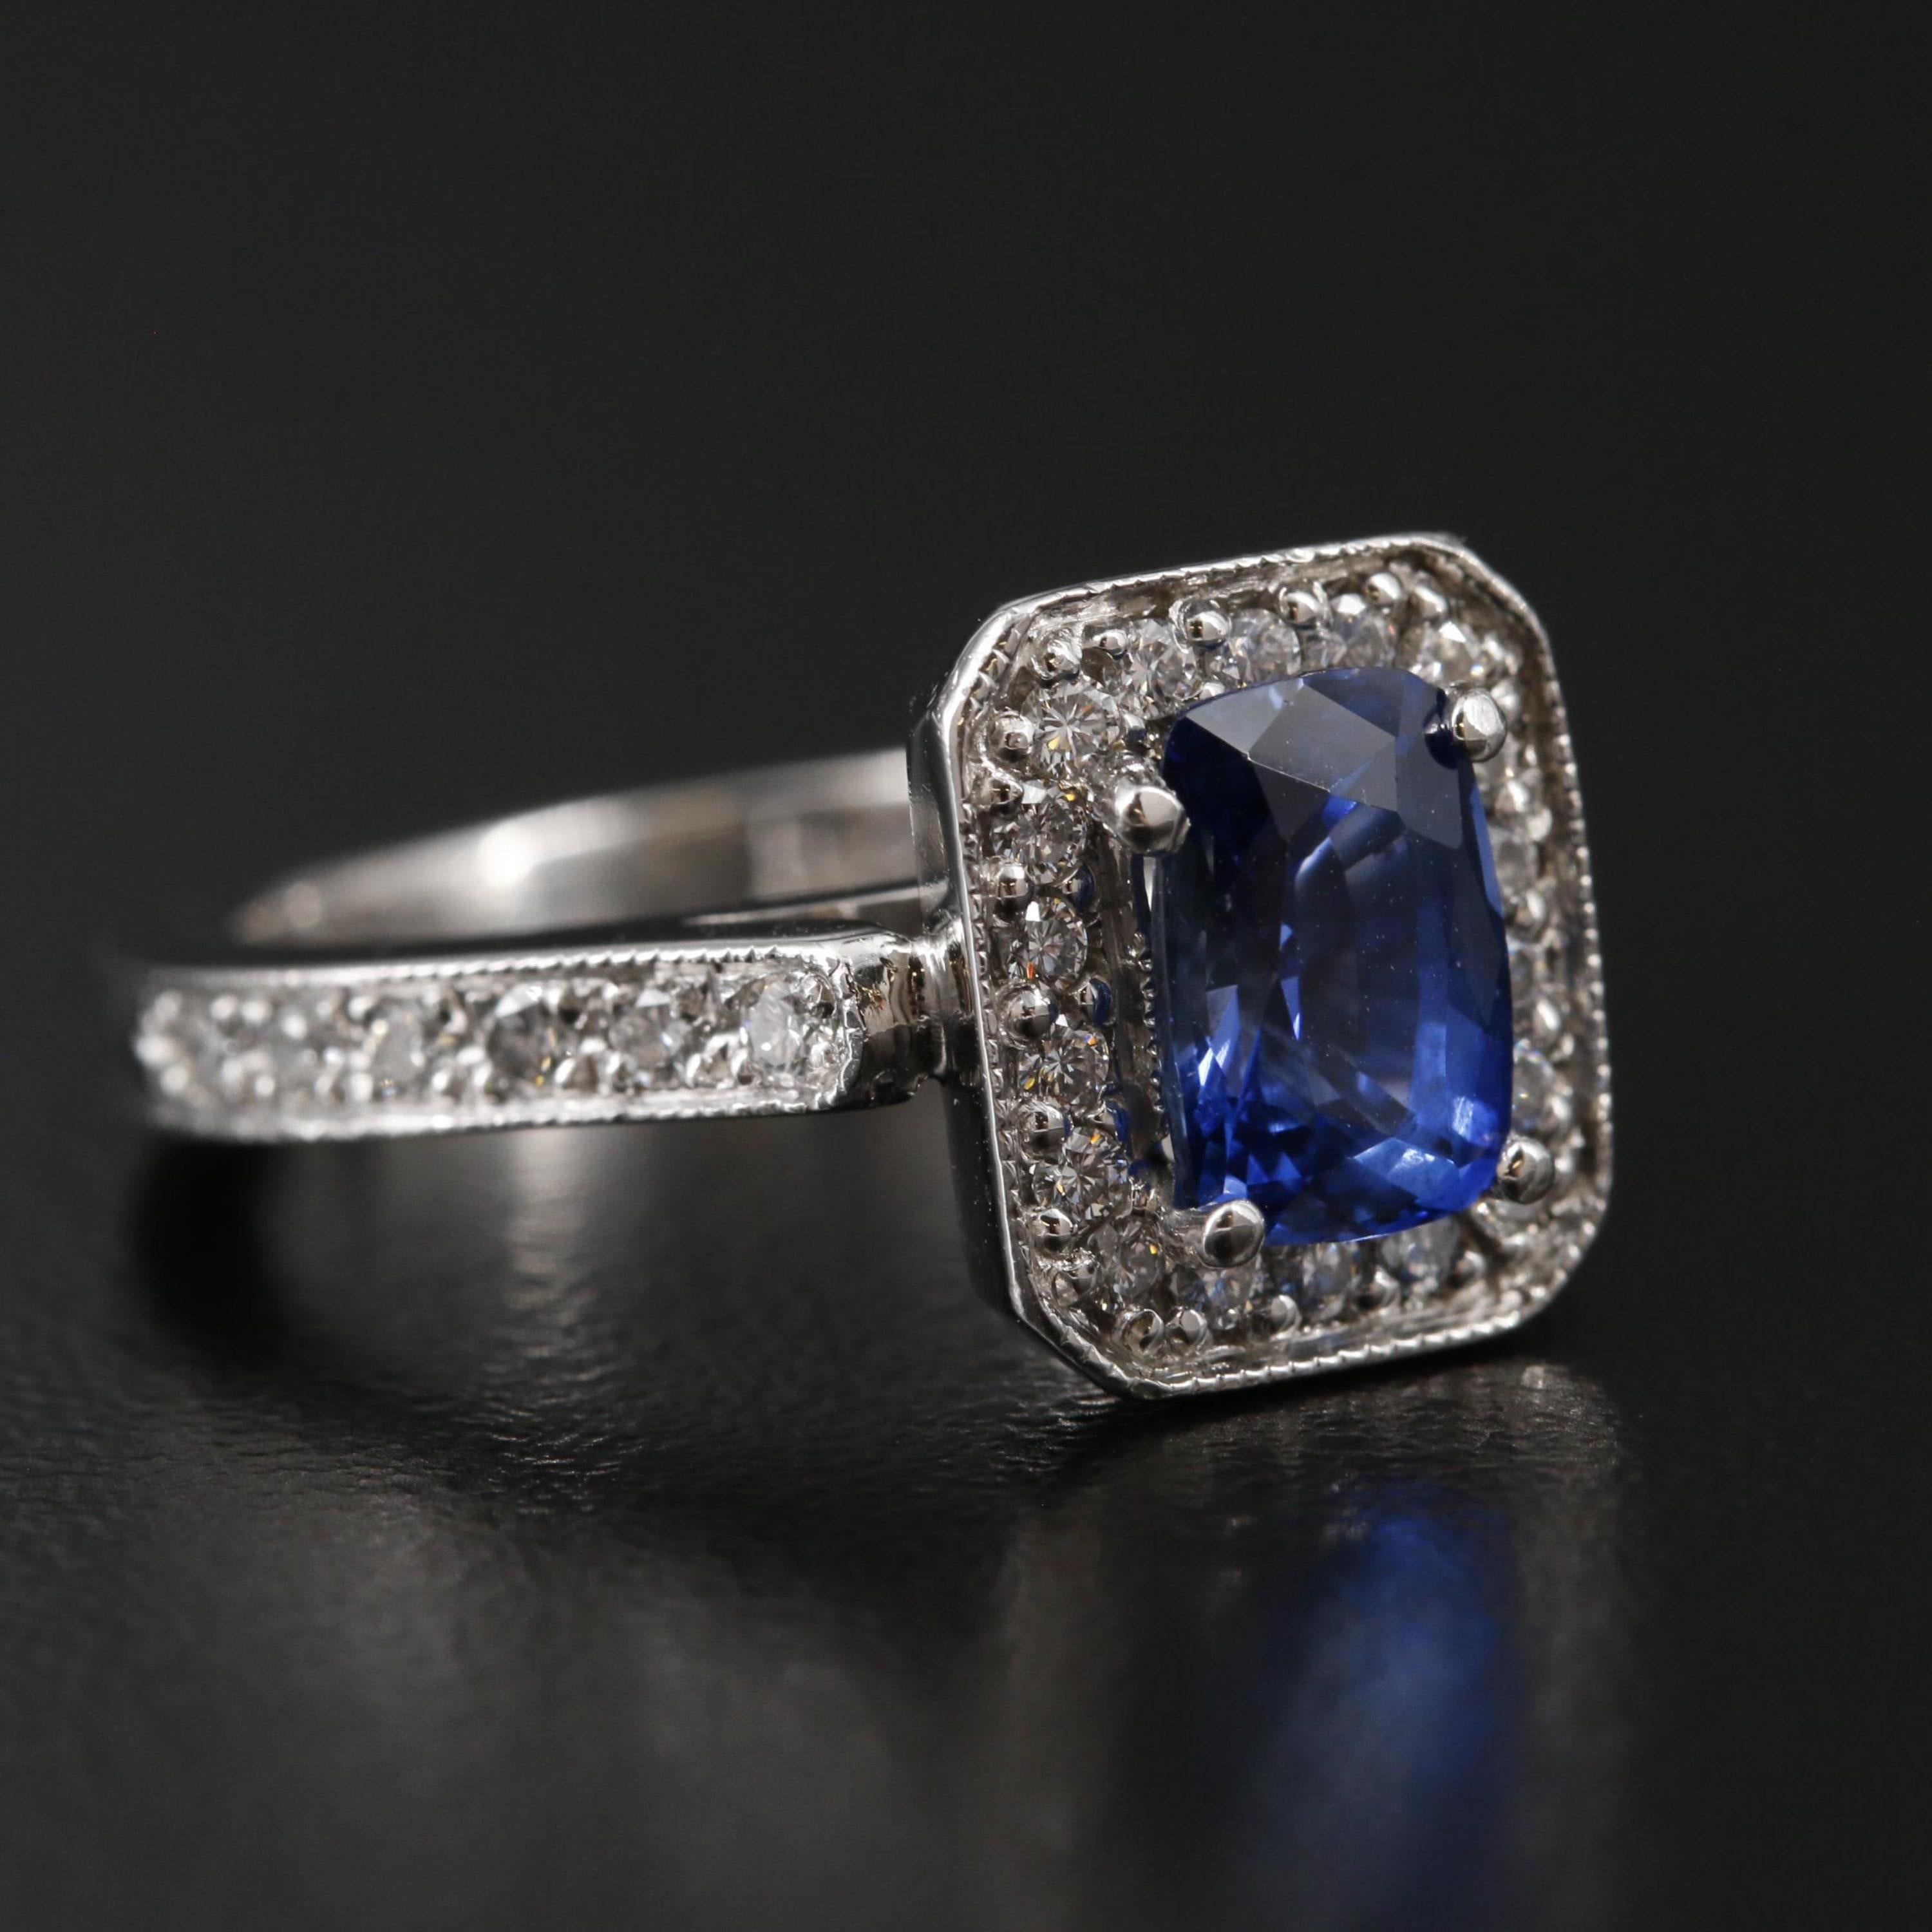 For Sale:  Art Deco Cushion Cut Sapphire Engagement Ring Halo Vintage Diamond Wedding Ring  5